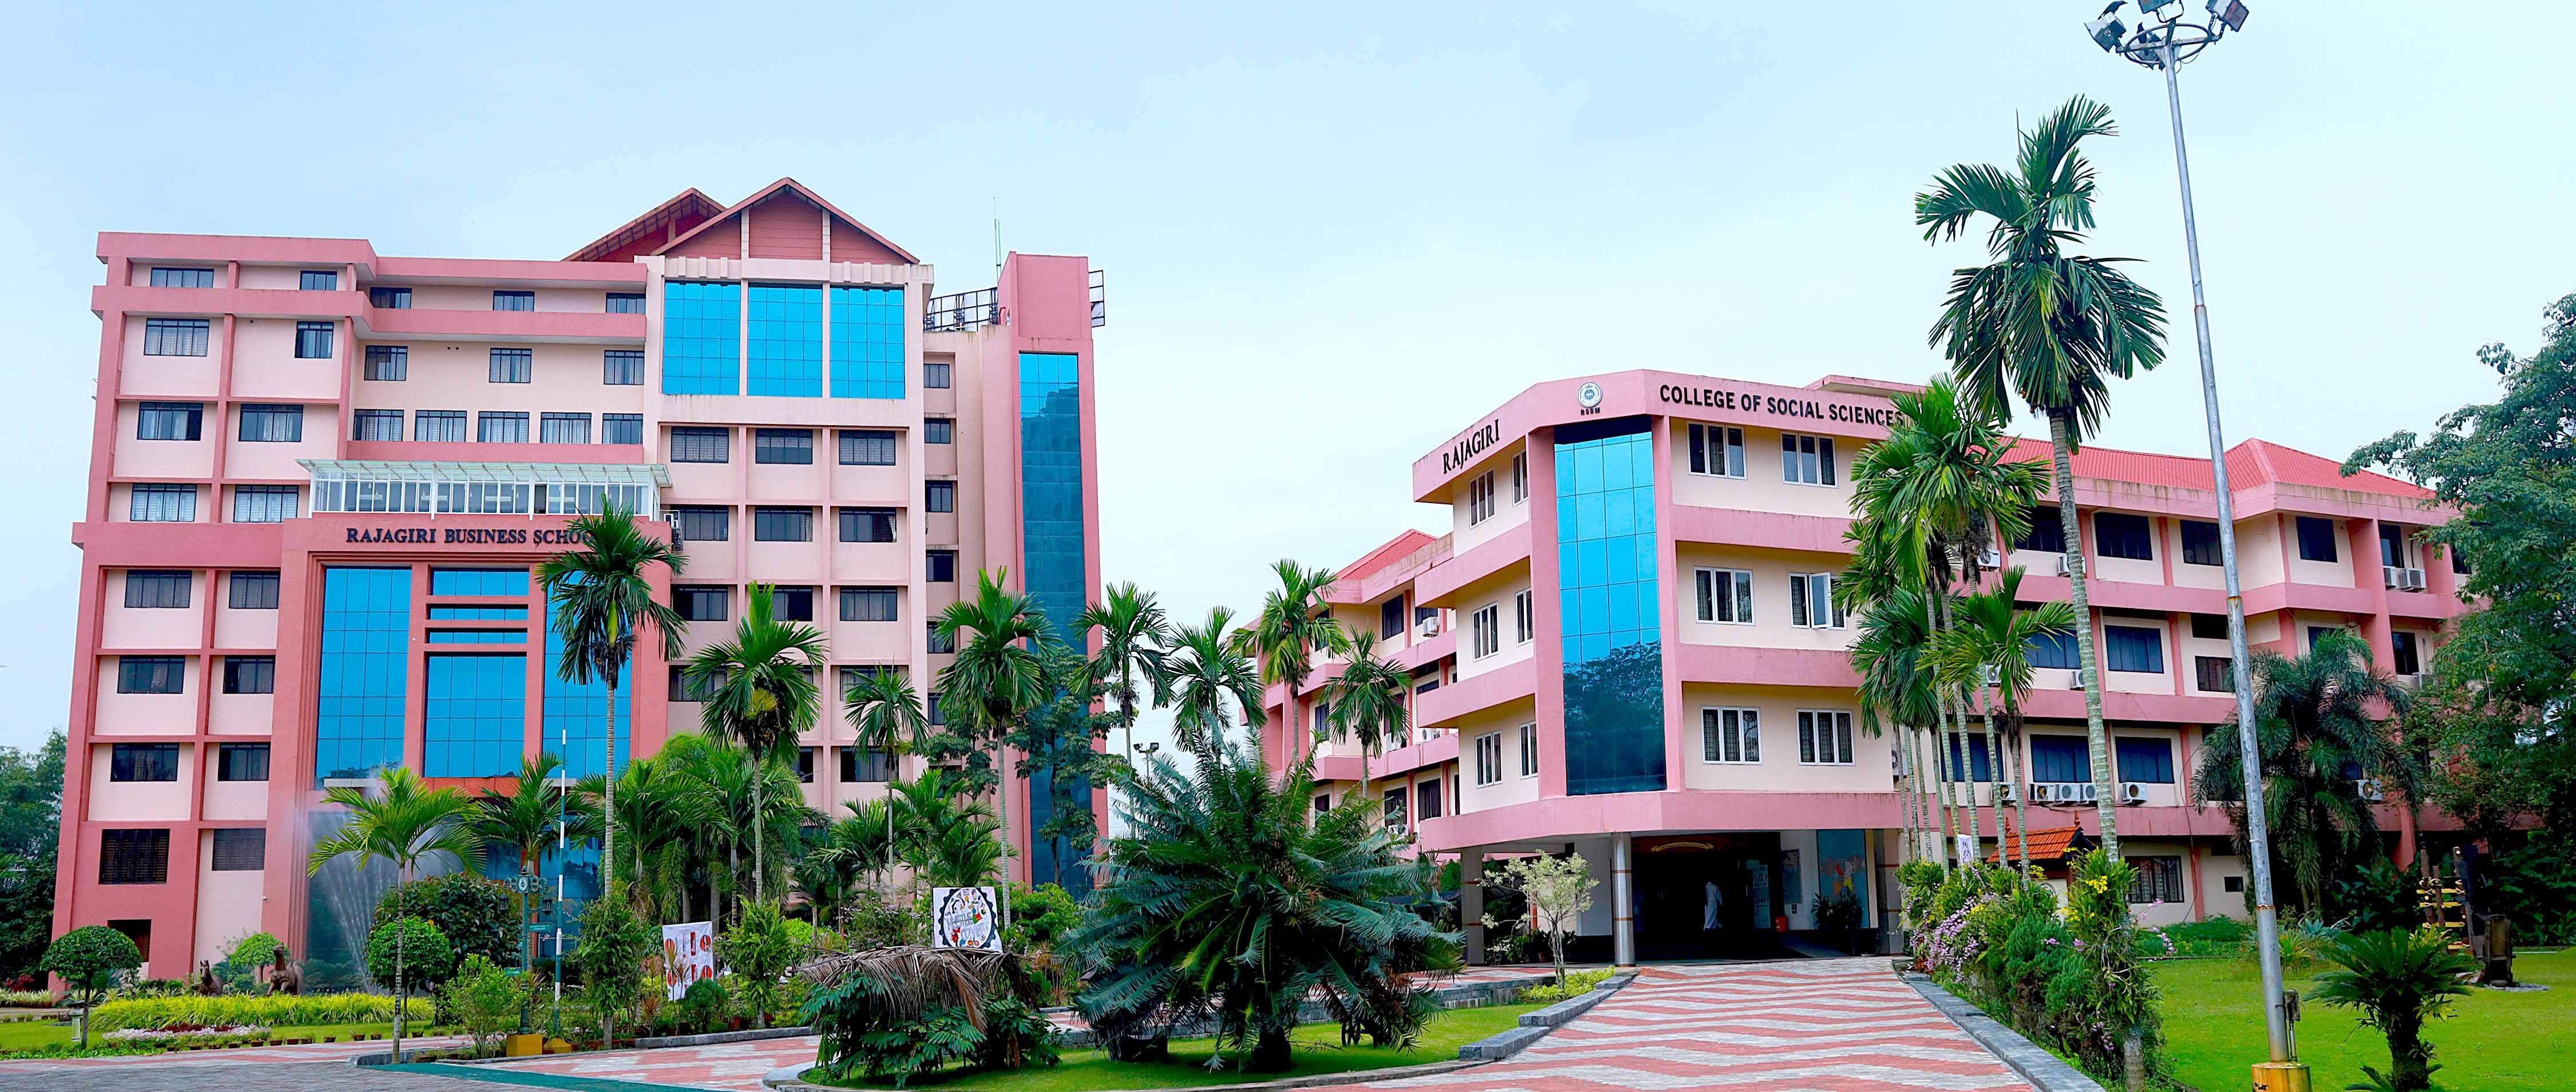 Rajagiri Centre for Business Studies - RCBS